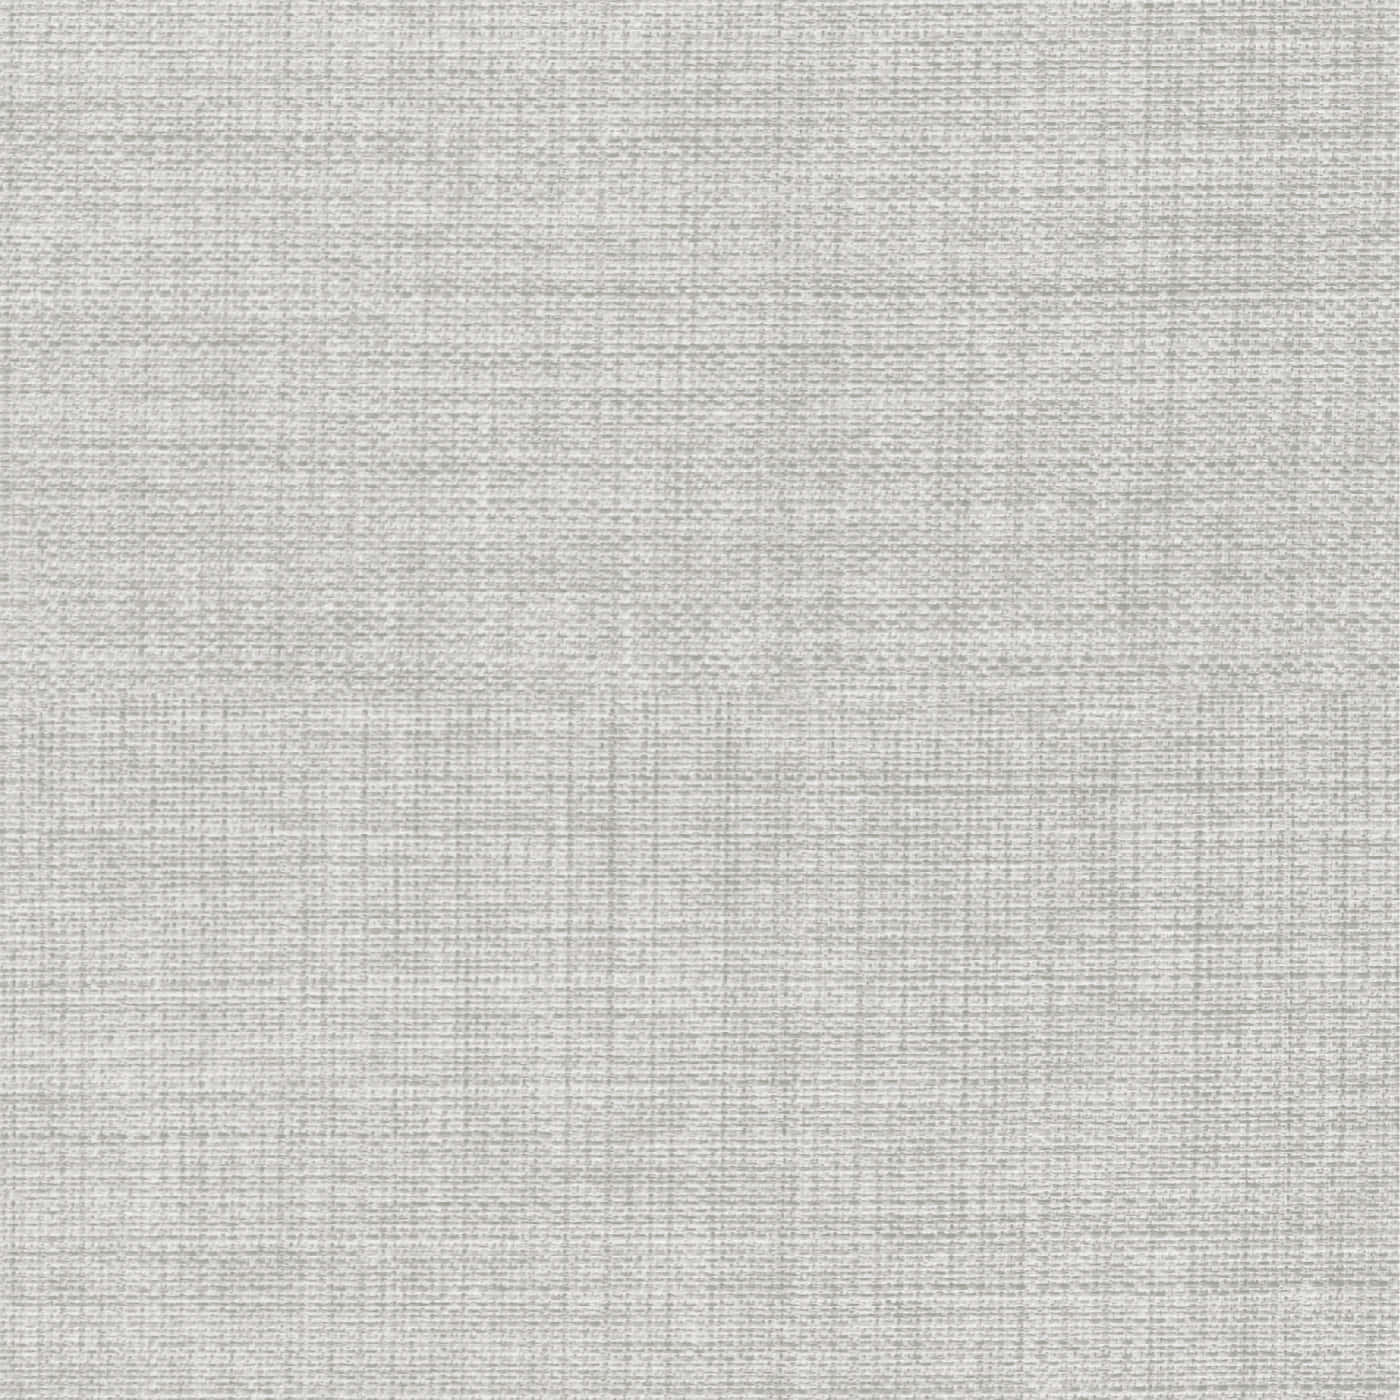 A Light Grey Fabric Background